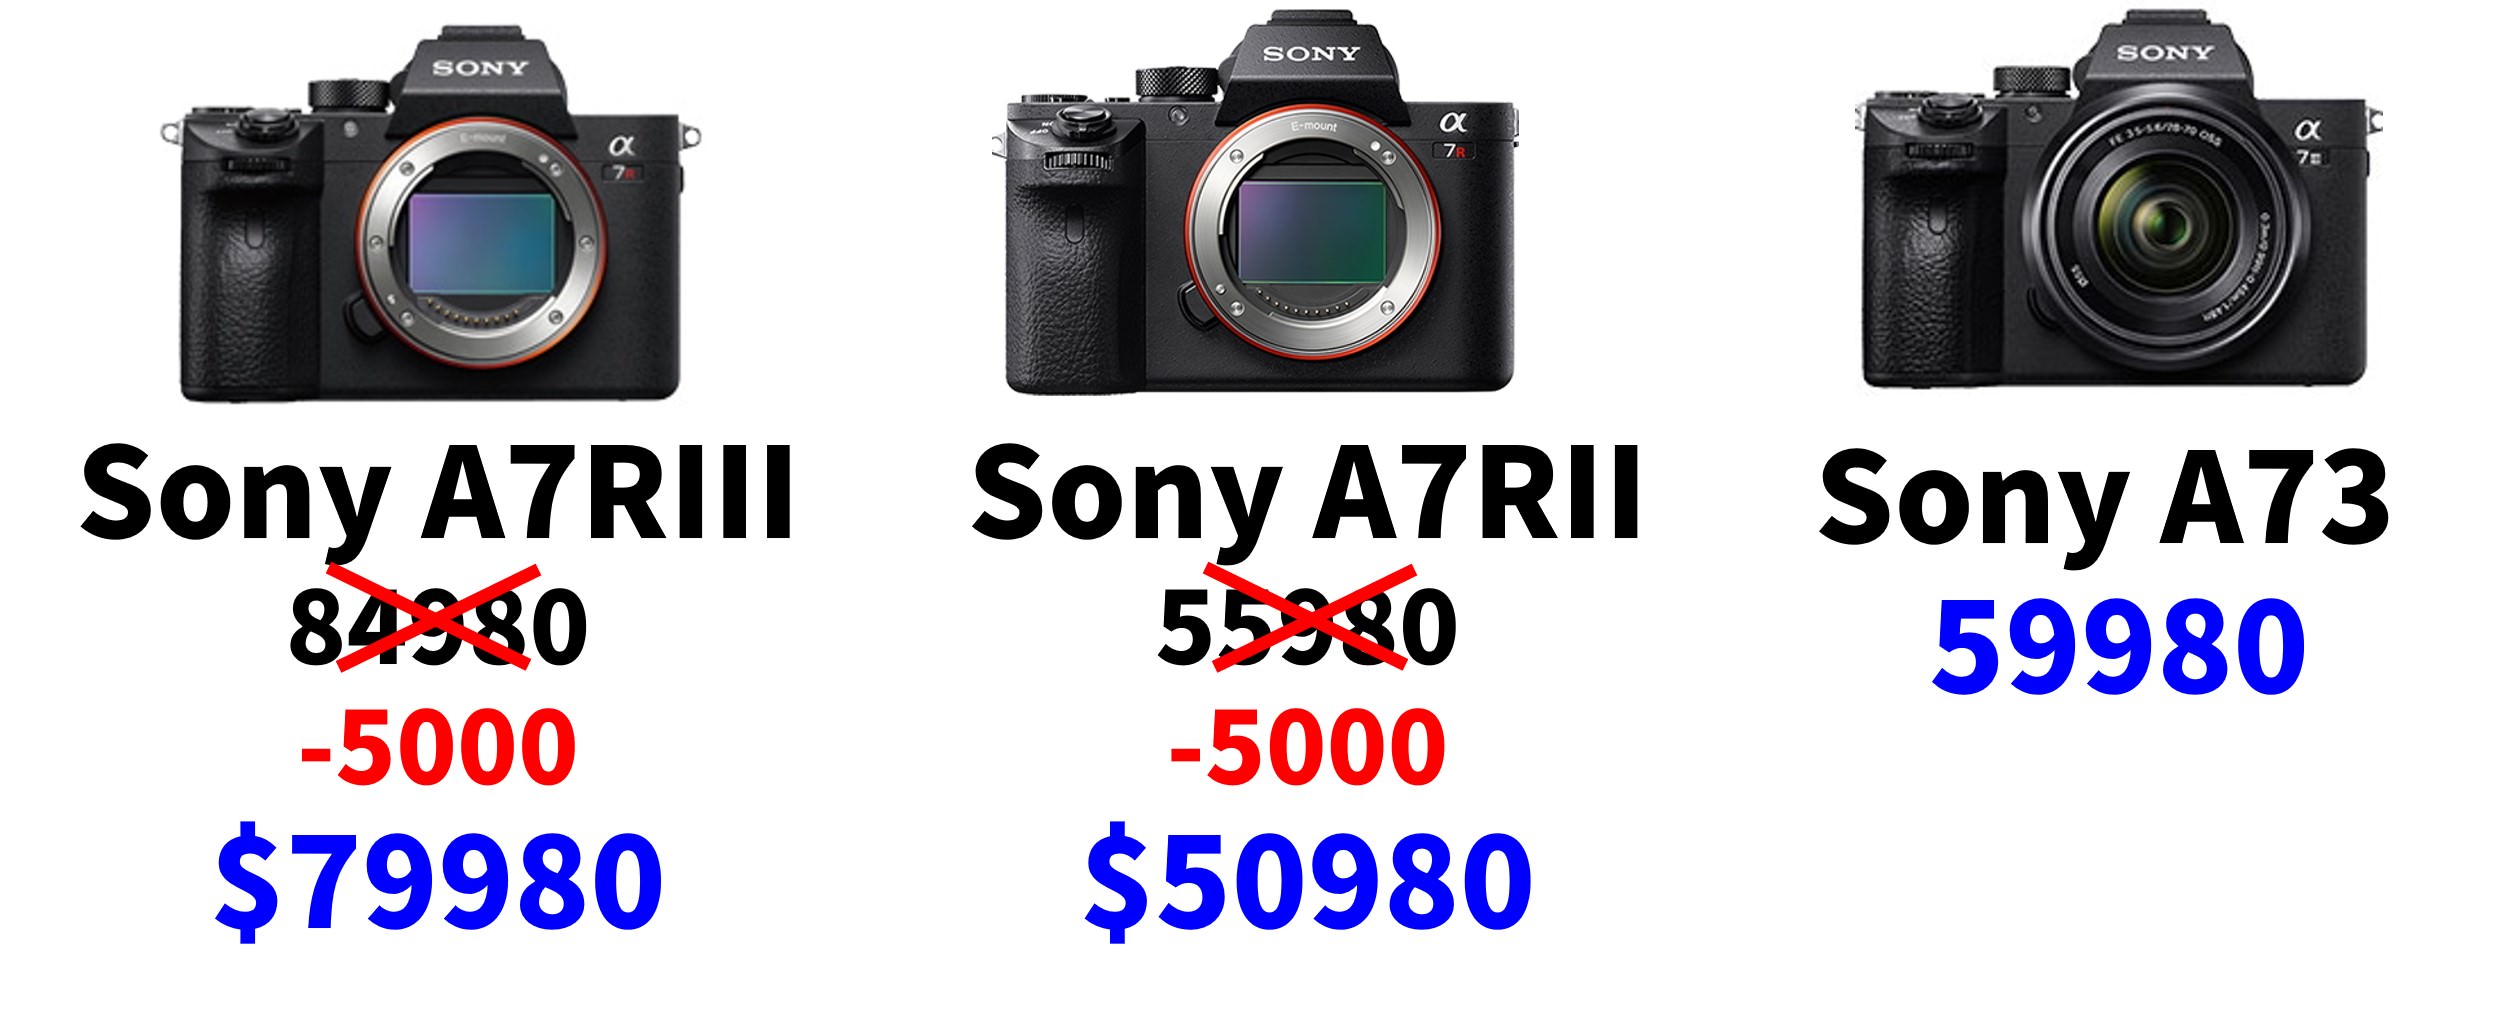 [3C NEWS] Sony A7 全系列大幅降價與贈品，A9 降 $15000 ，A7RIII 降 $5000，並且加贈背帶